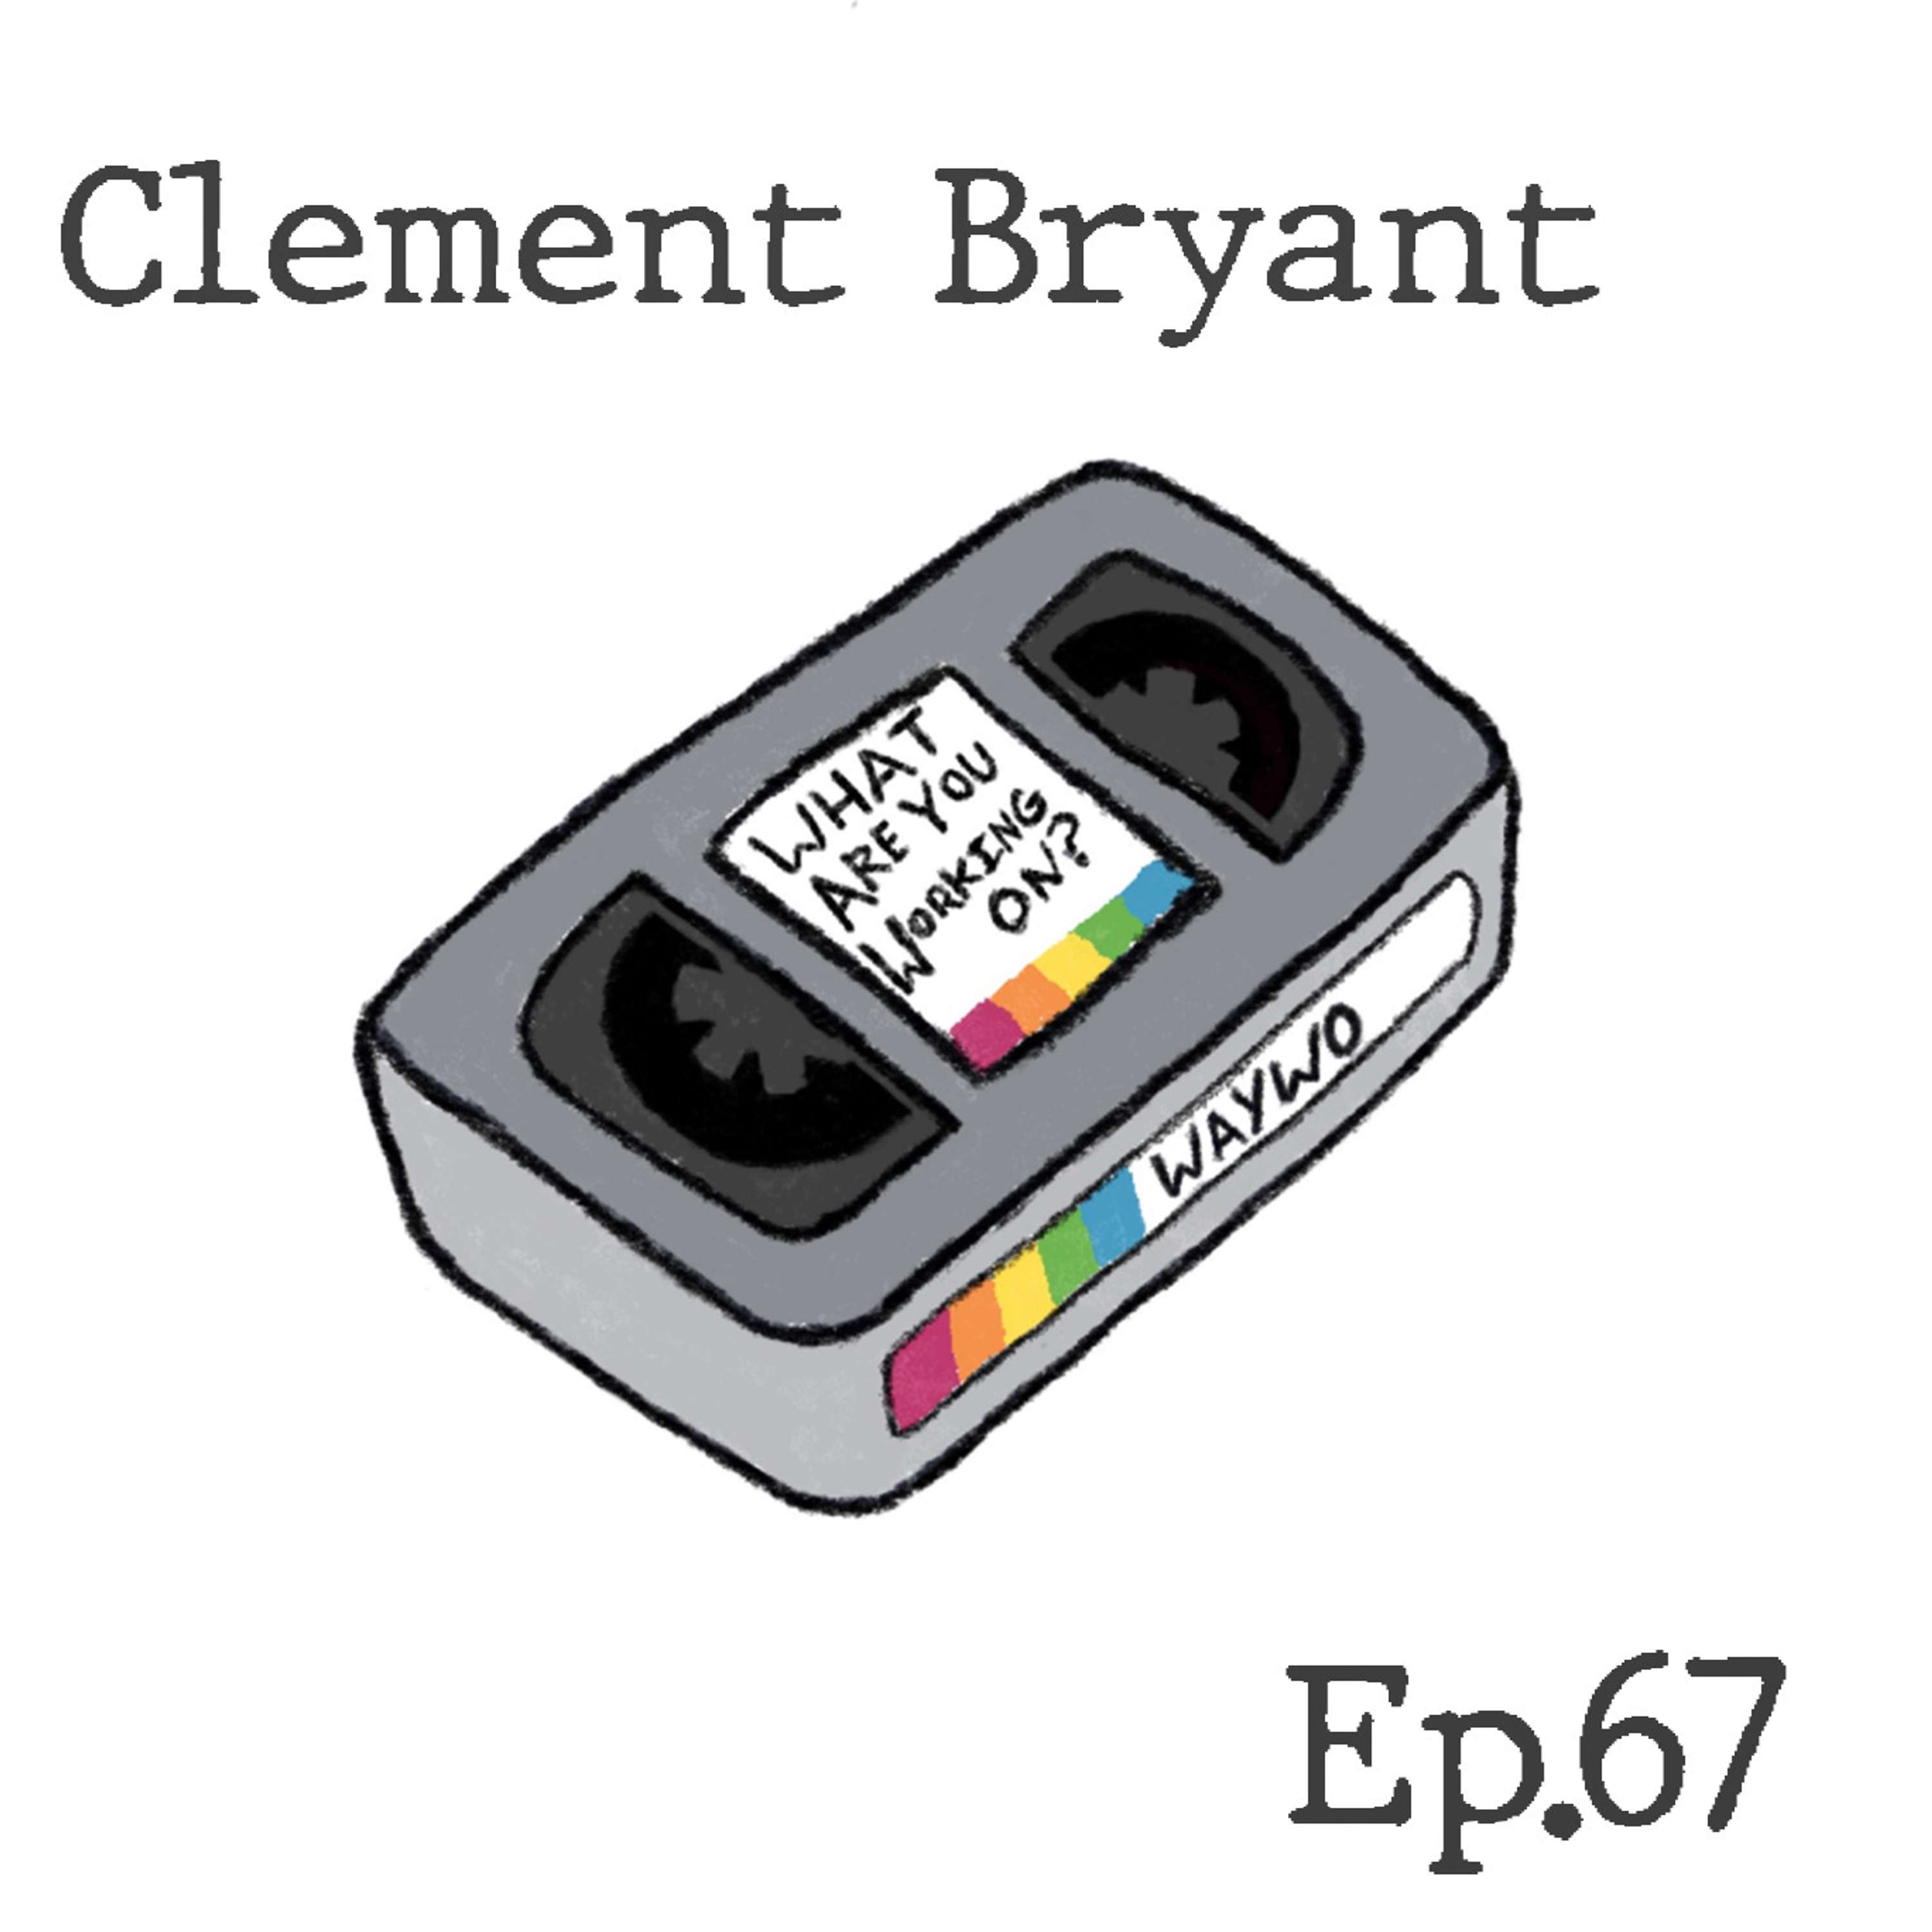 #67 - Clement Bryant